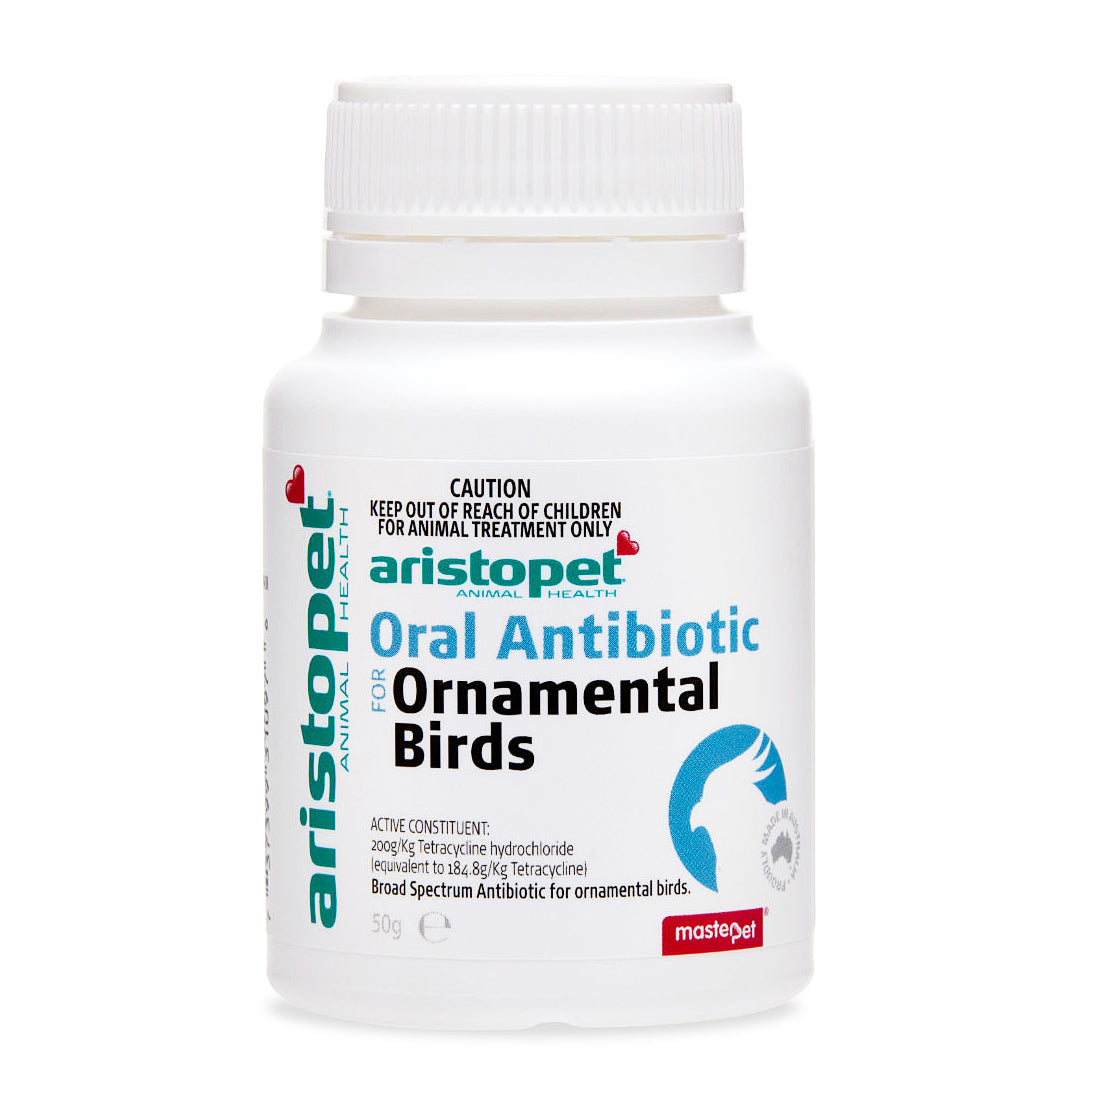 Aristopet Oral Antibiotic for Ornamental Birds 50g